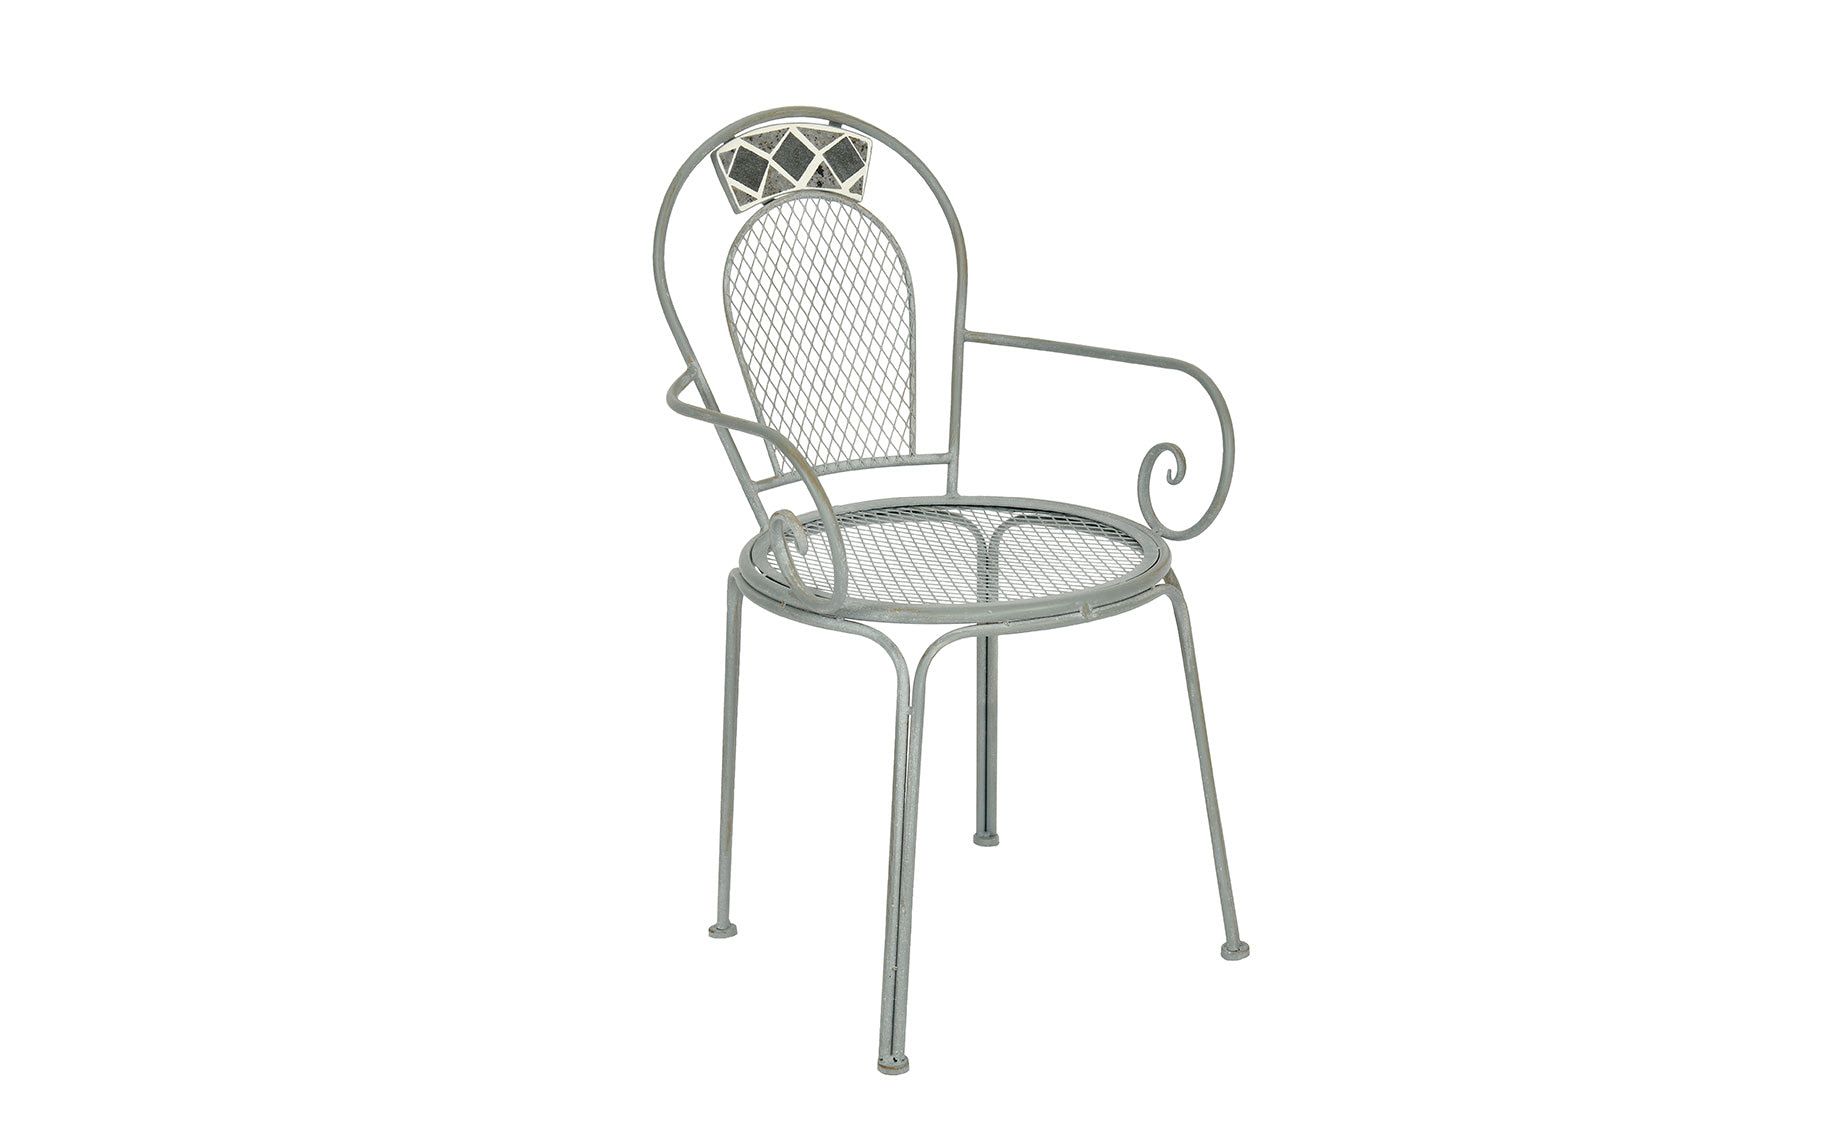 Stolica Bolero sa rukonaslonima 52x58x88cm sivi metal